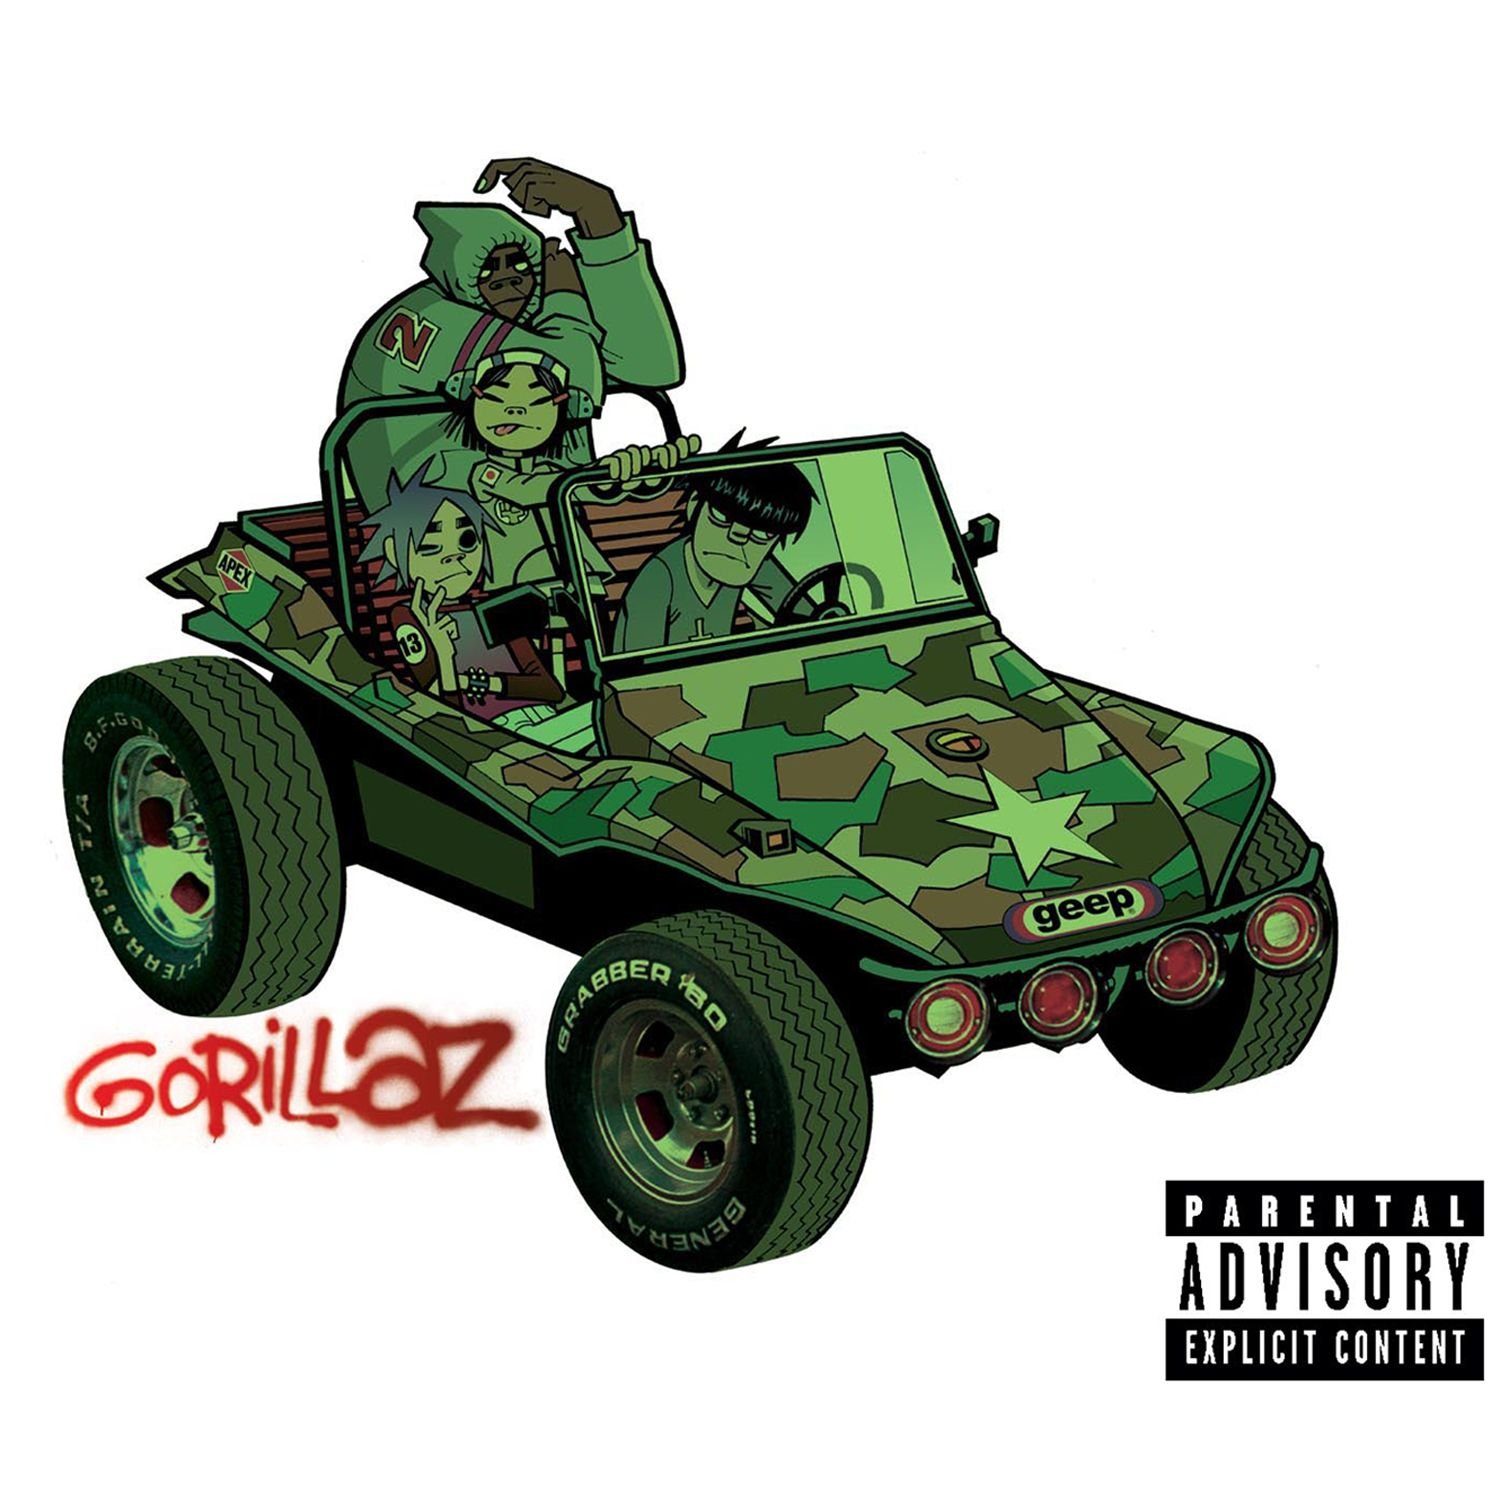 Gorillaz "Gorillaz" CD